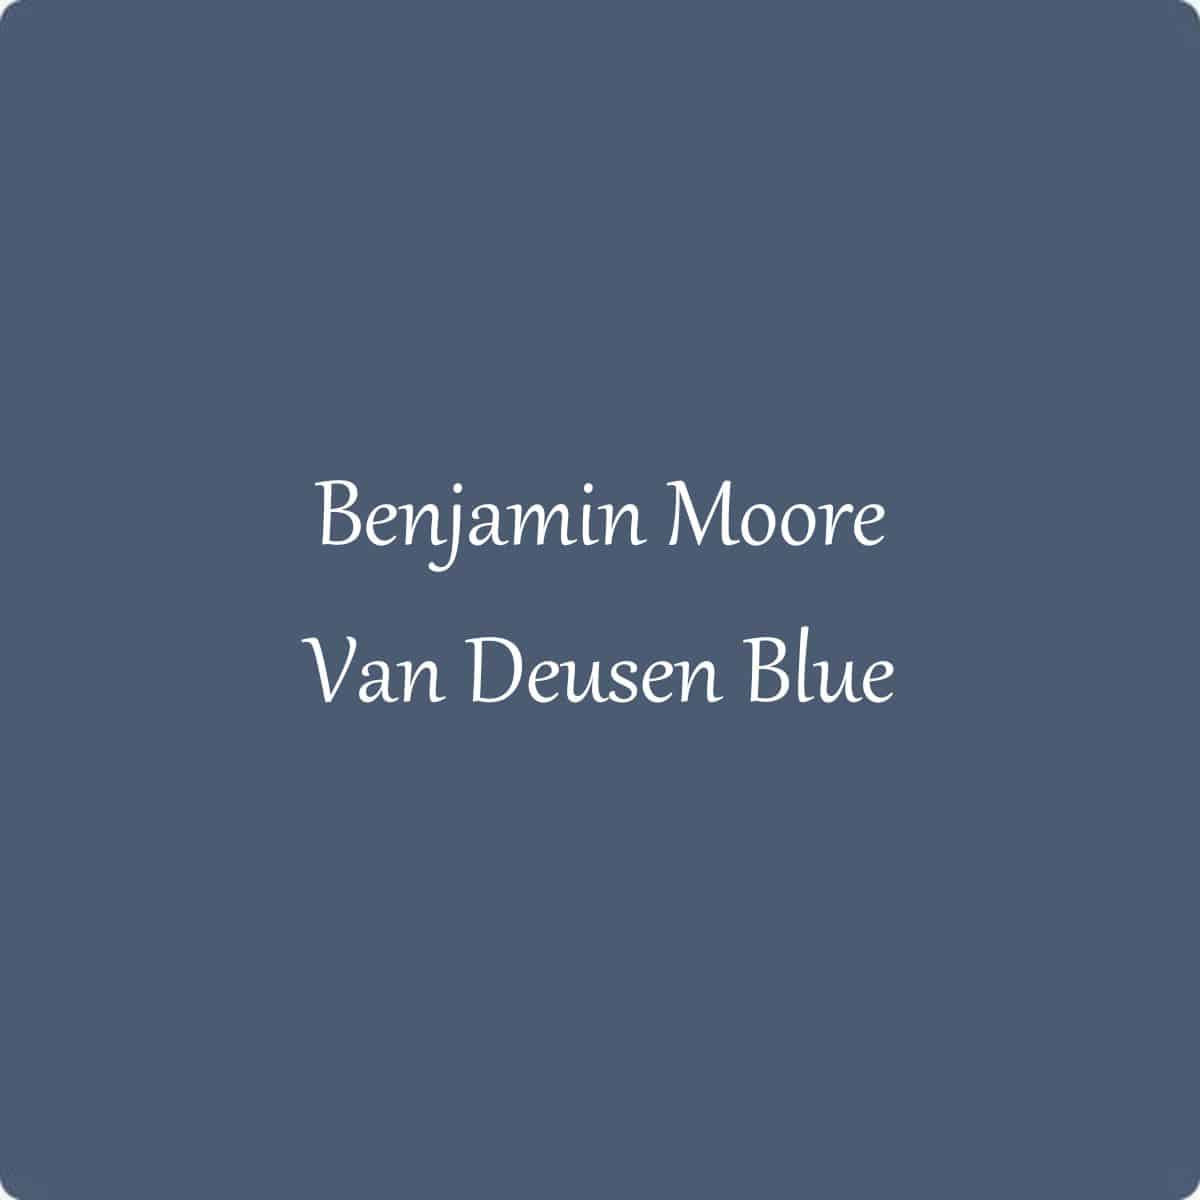 A swatch of Van Deusen Blue with text overlay.